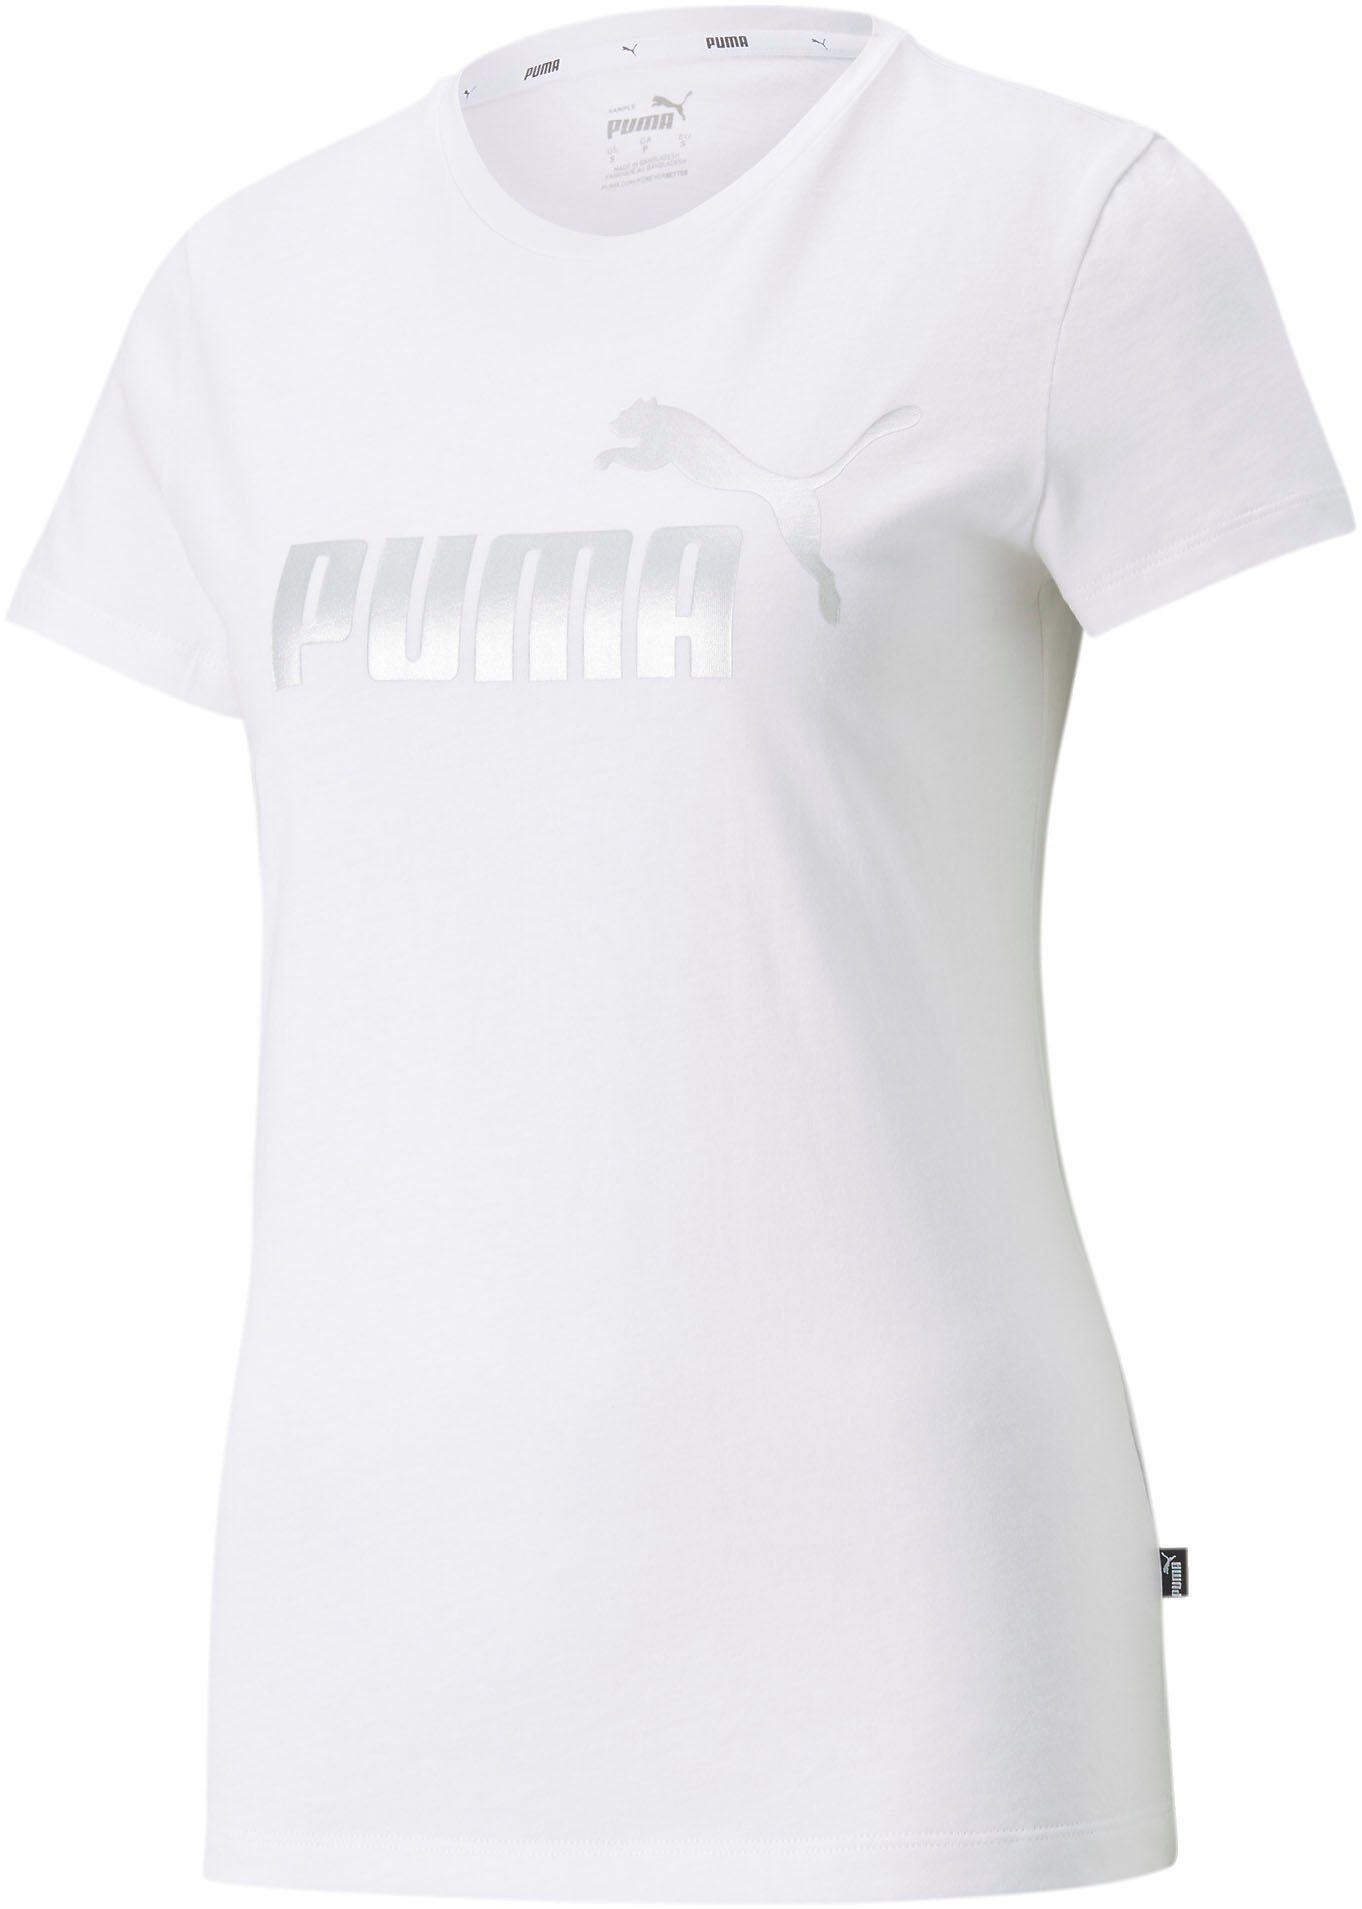 TEE PUMA metallic LOGO METALLIC ESS+ White-silver Puma T-Shirt